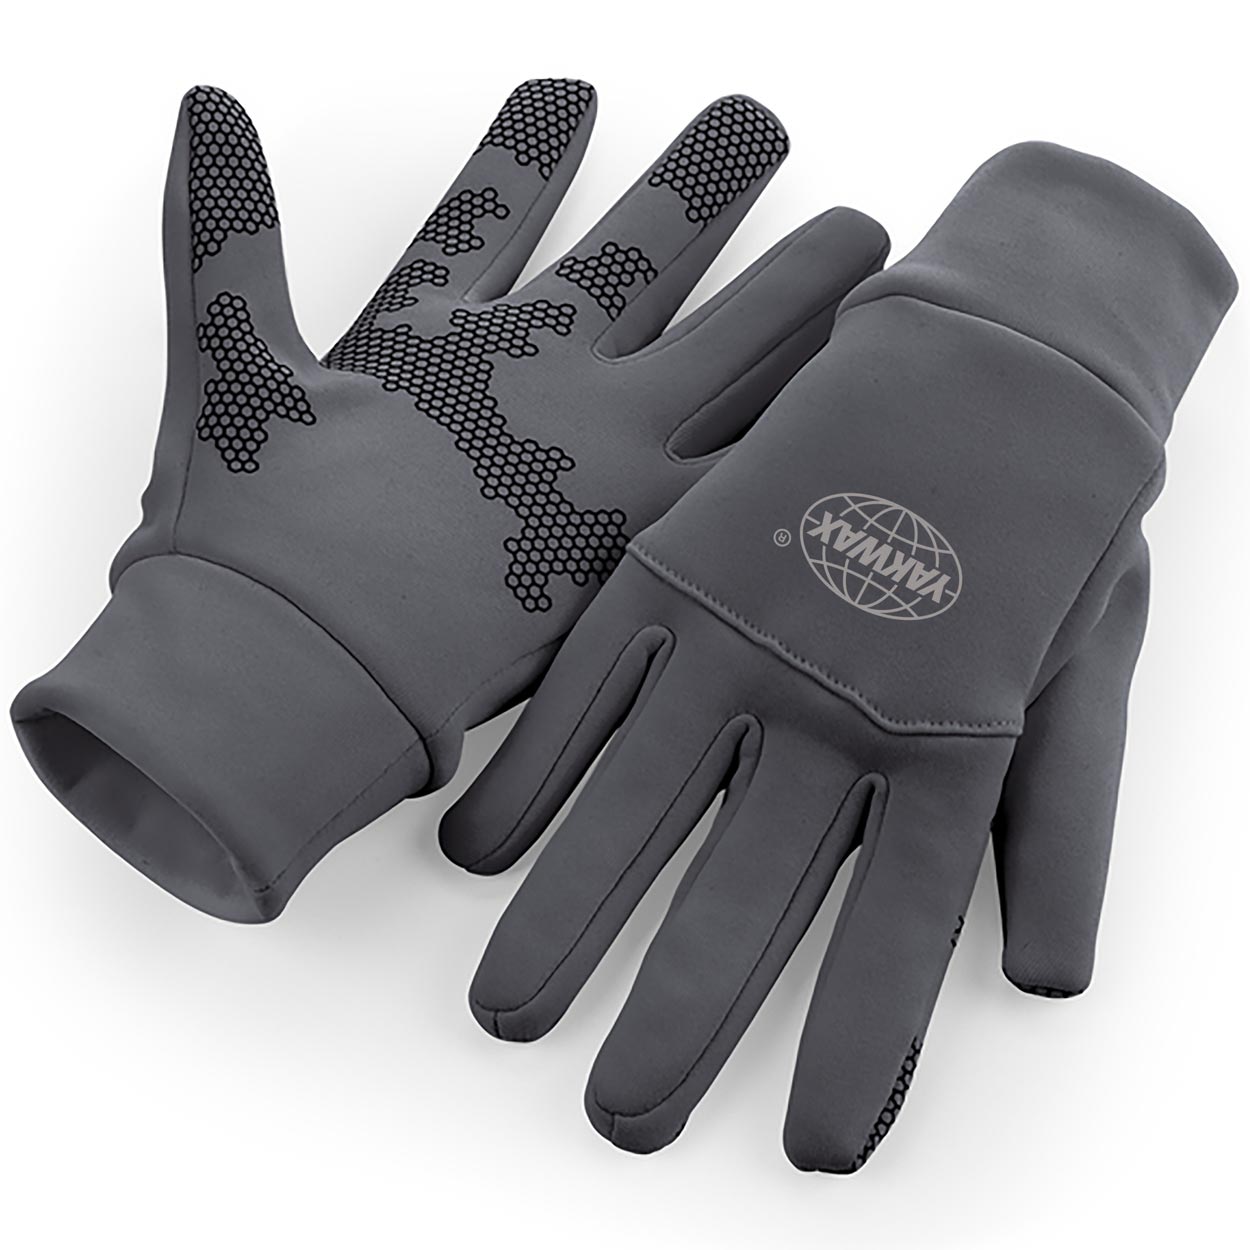 Yakwax Global Explorer Gloves - Slate Grey - Snowboard/Ski Gloves by Yakwax